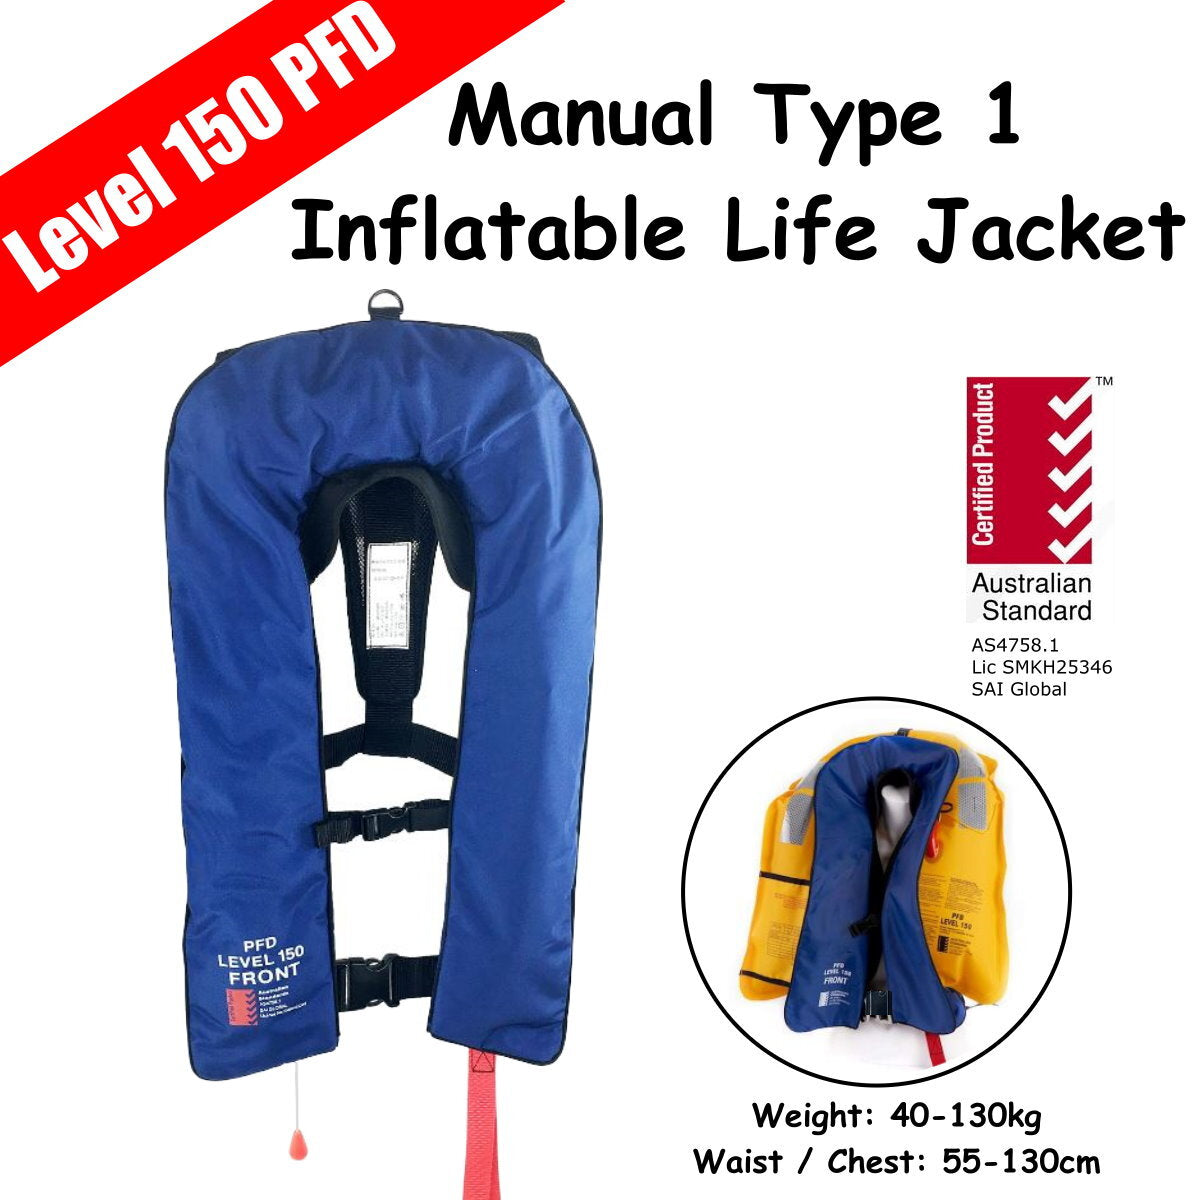 Inflatable Life Jacket PFD 1 Level 150 - Blue (Economy Version) - Australian Standard AS 4758